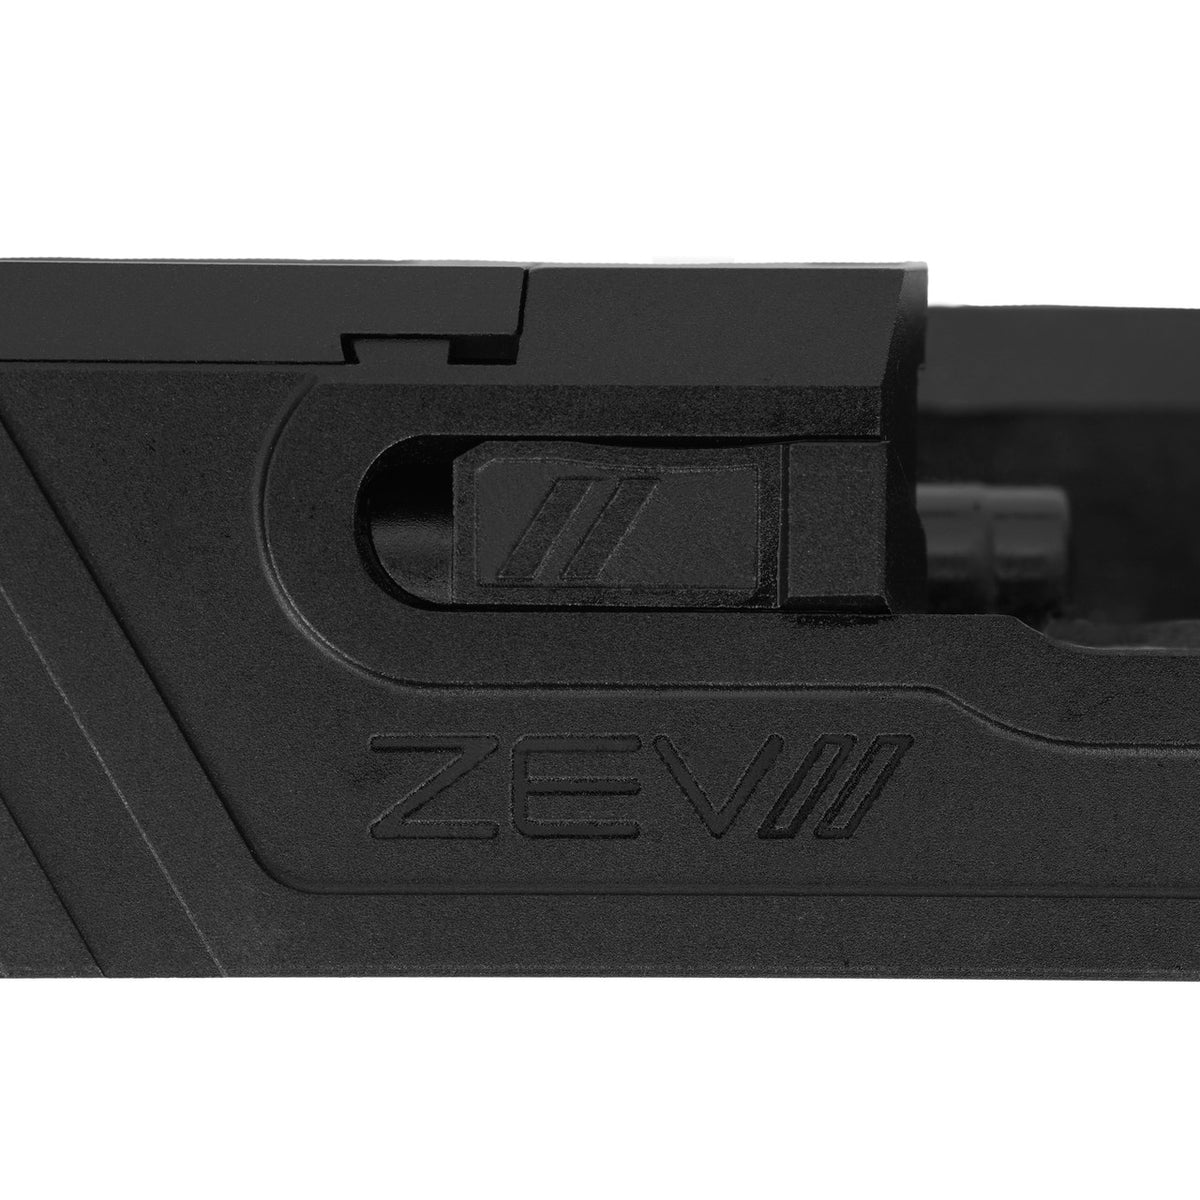 PTS ZEV OZ9 Elite (Ultra Version)